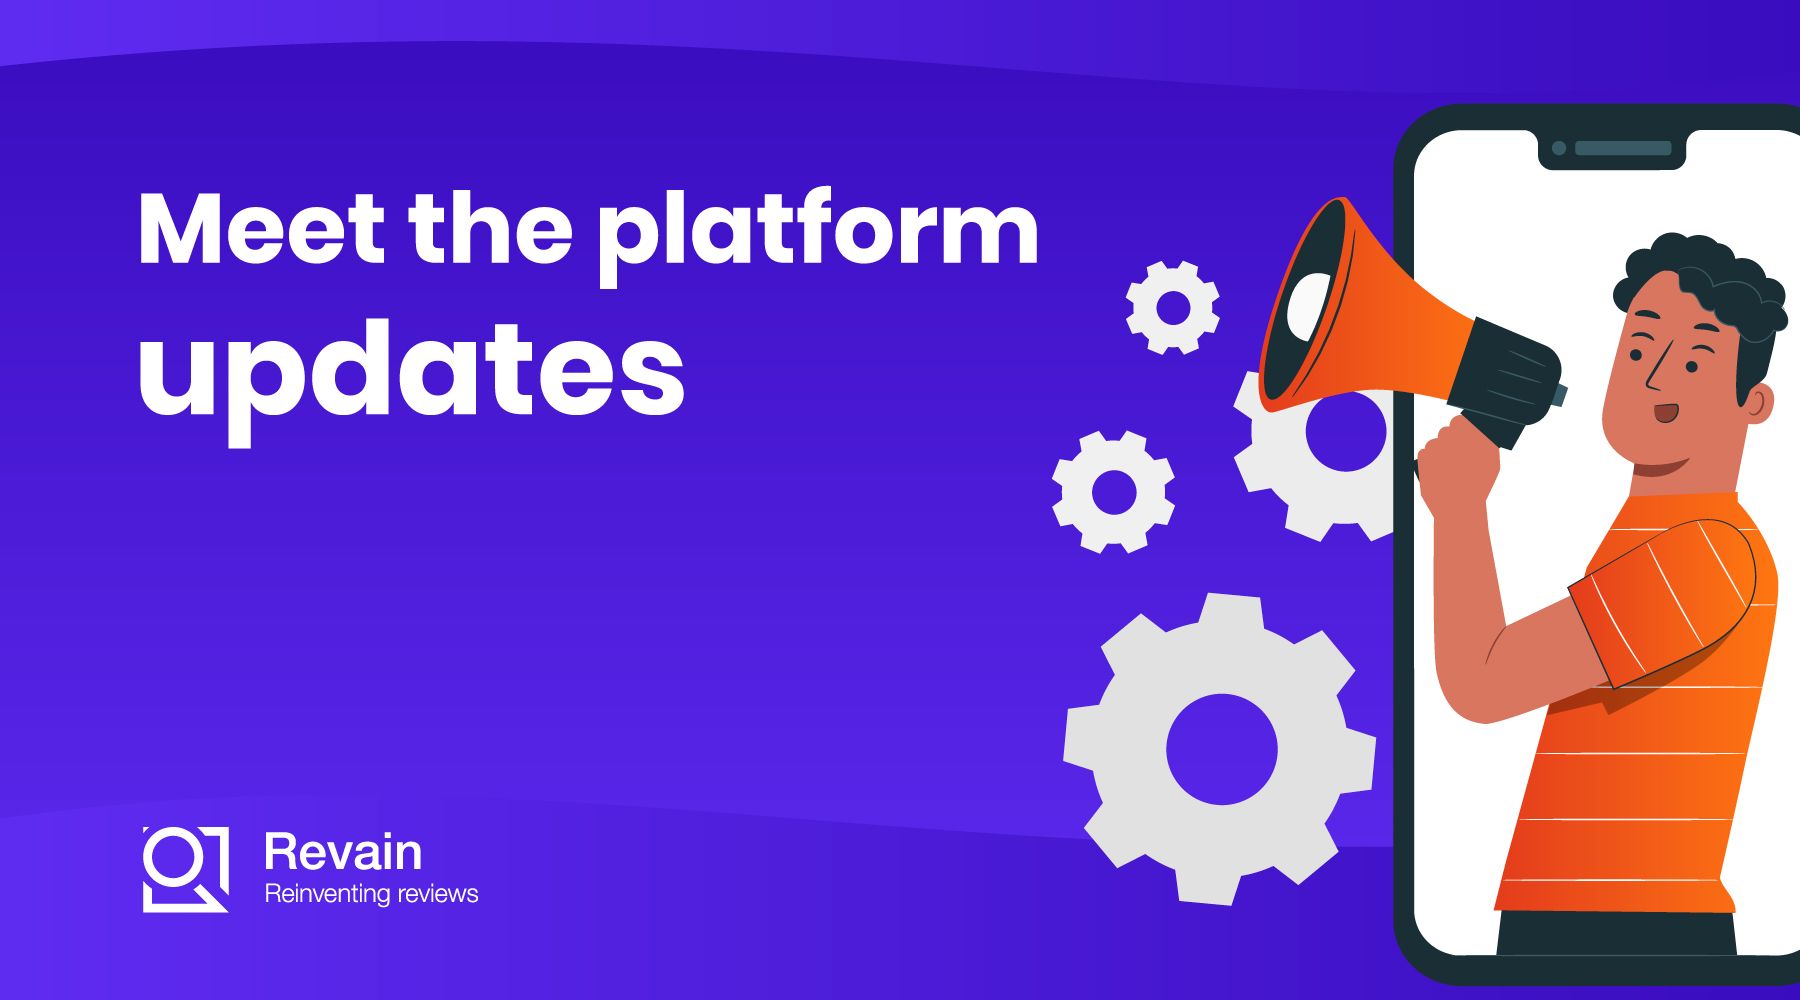 Meet the platform updates!